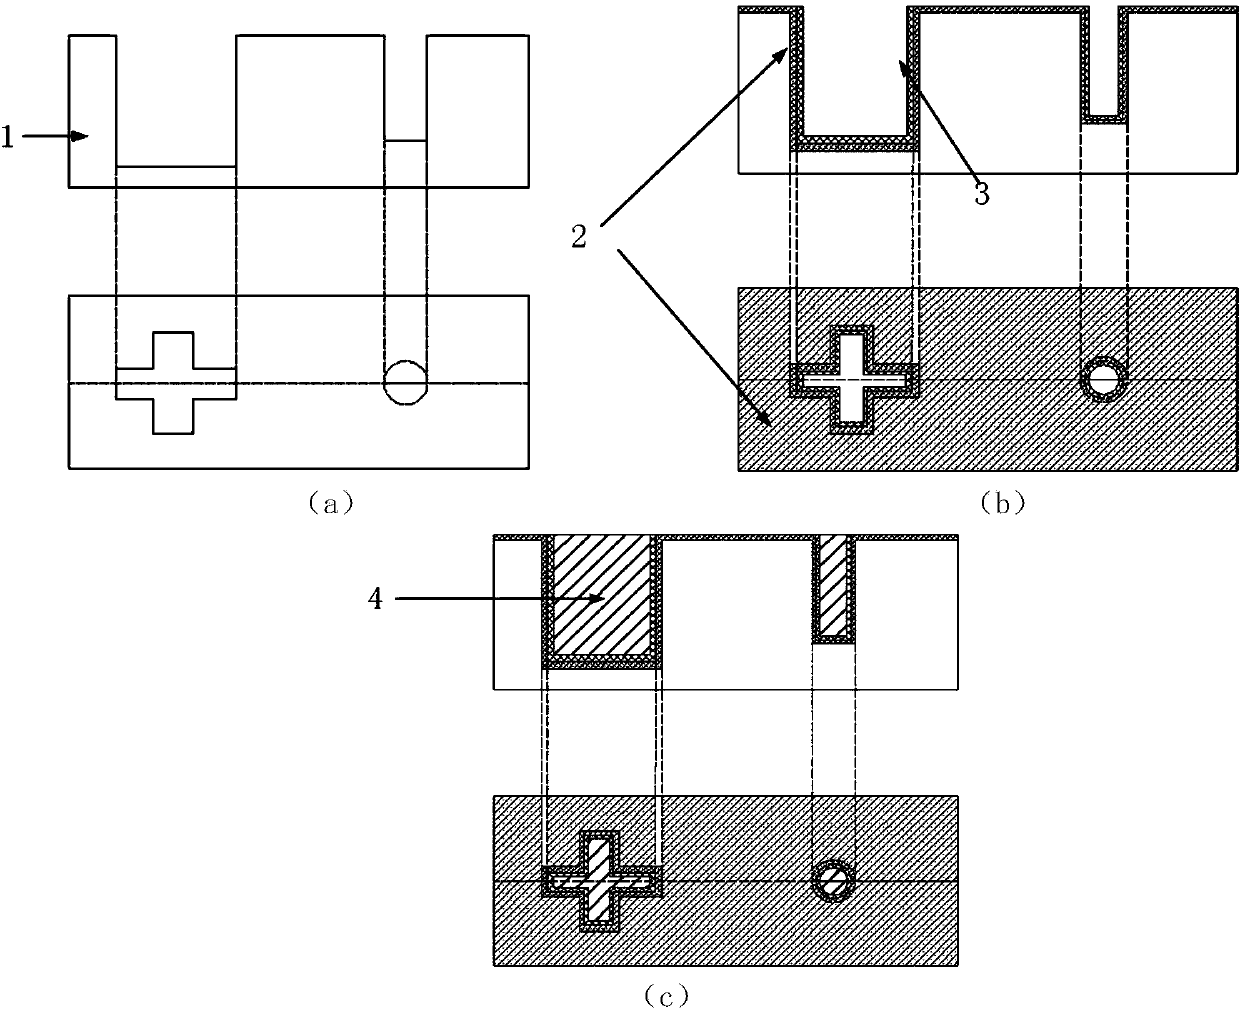 Crossed annular aligning mark based on TSV (through silicon via) three-dimensional integration process